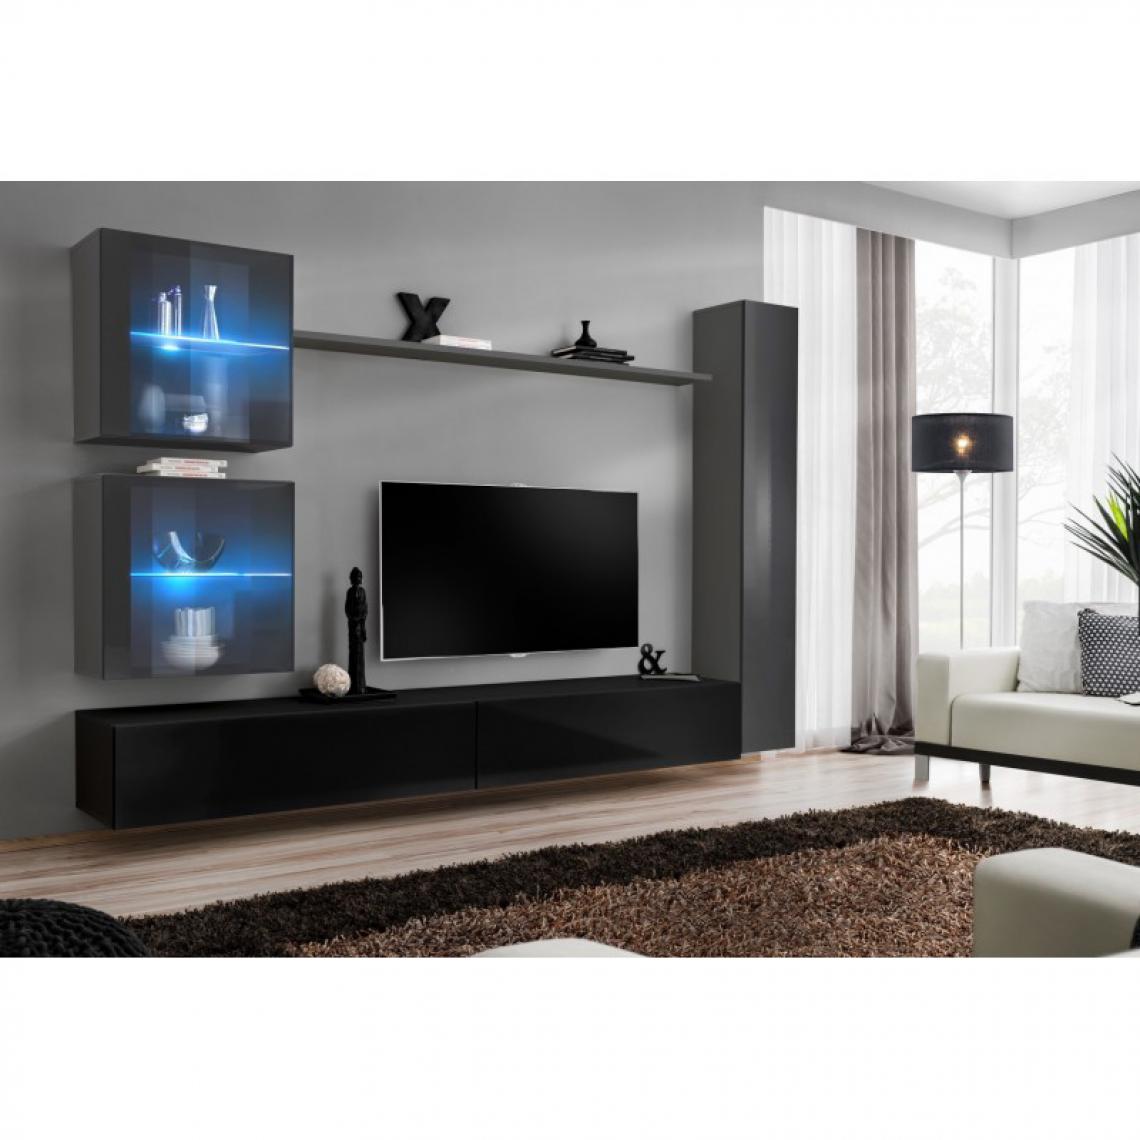 Ac-Deco - Meuble TV Mural Design Switch XVIII 280cm Noir & Gris - Meubles TV, Hi-Fi